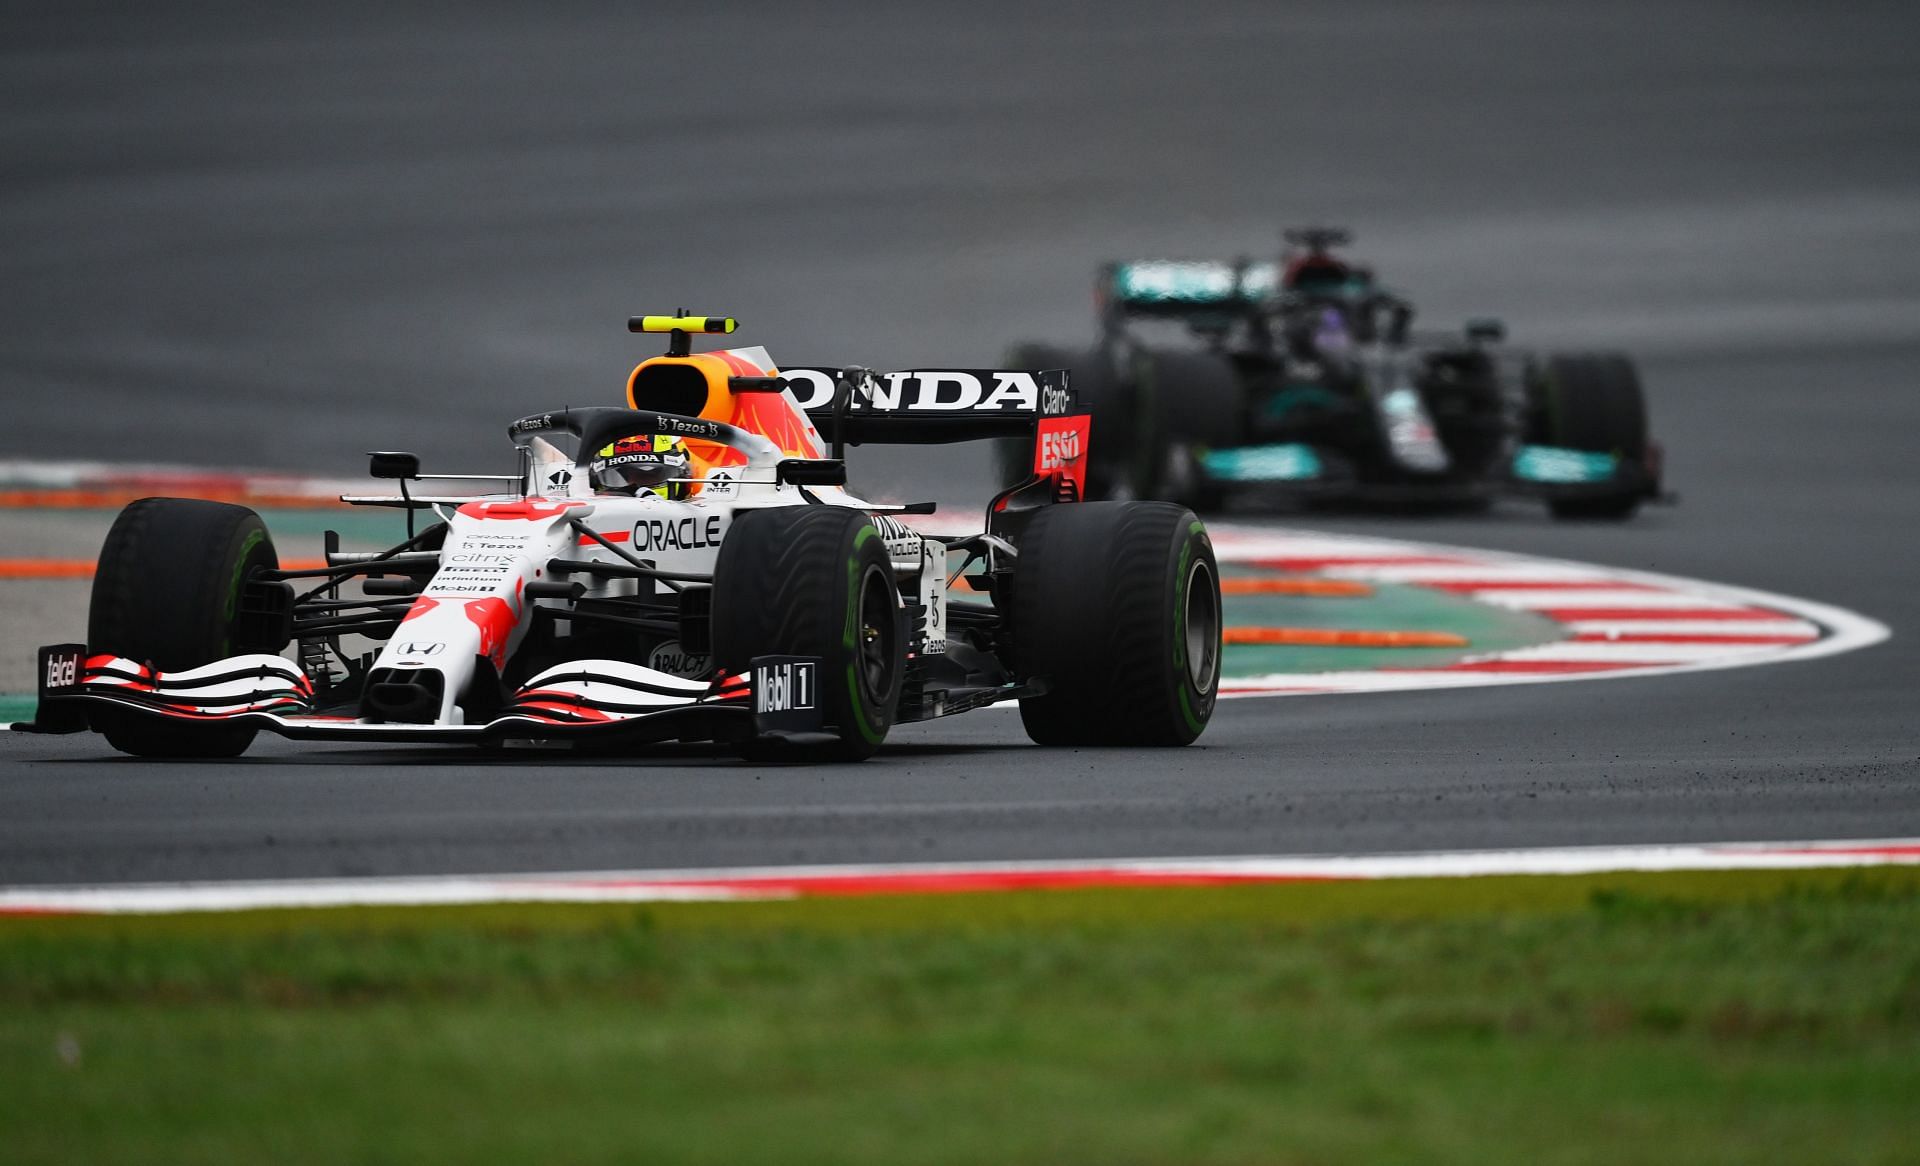 F1 Grand Prix of Turkey - Sergio Perez and Lewis Hamilton